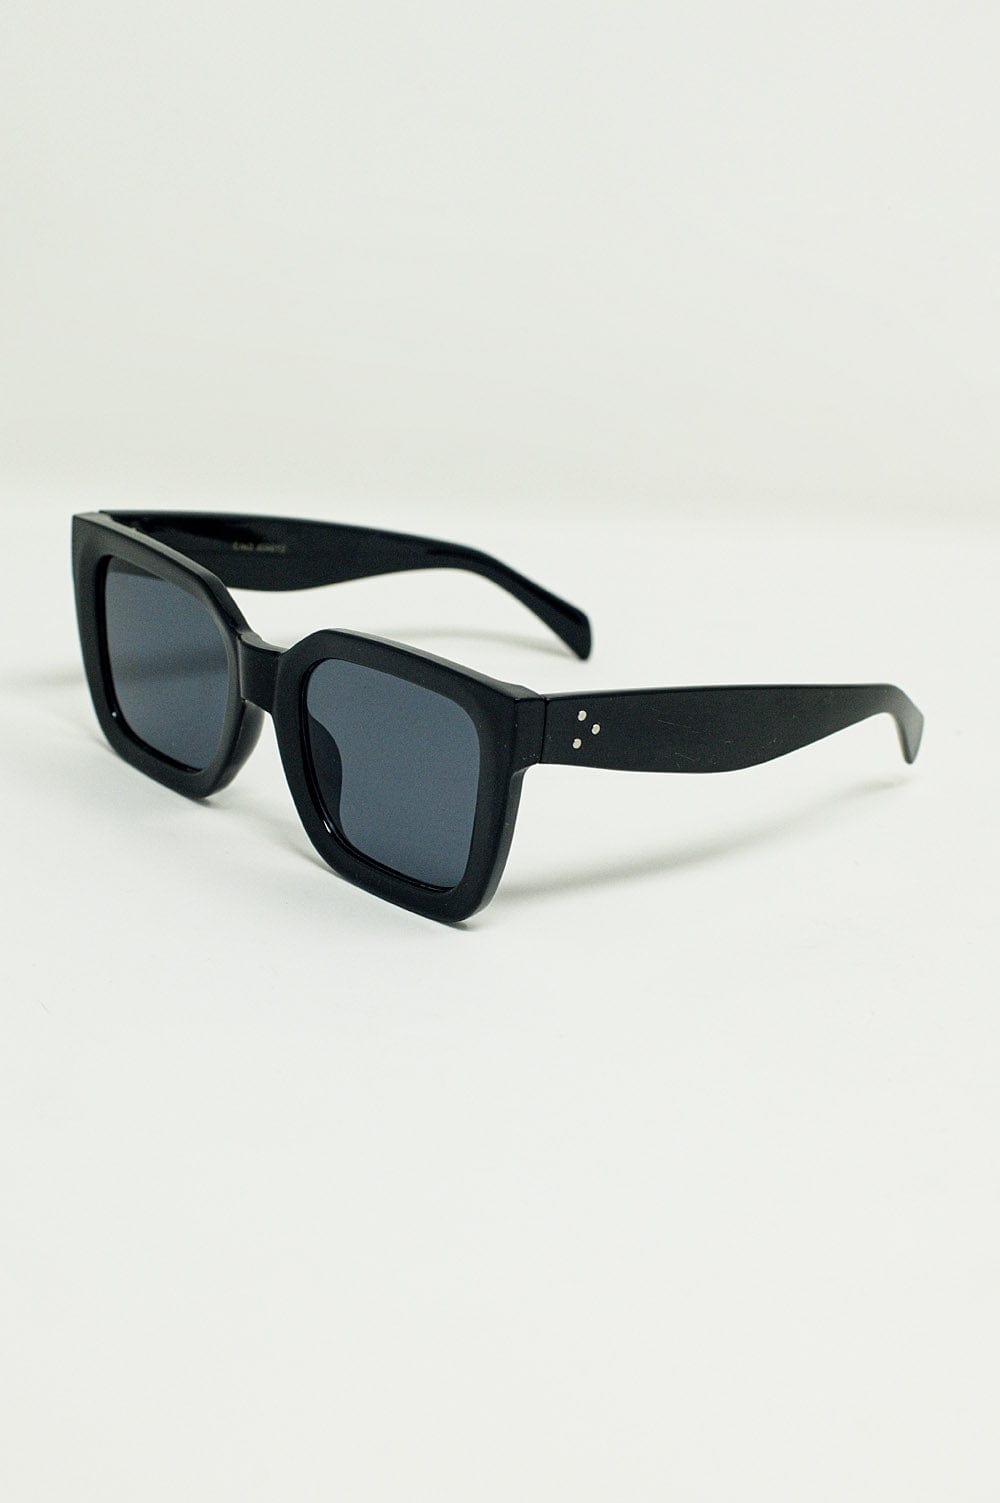 Q2 Women's Sunglasses One Size / Black Squared Sunglasses With Dark Lenses In Black